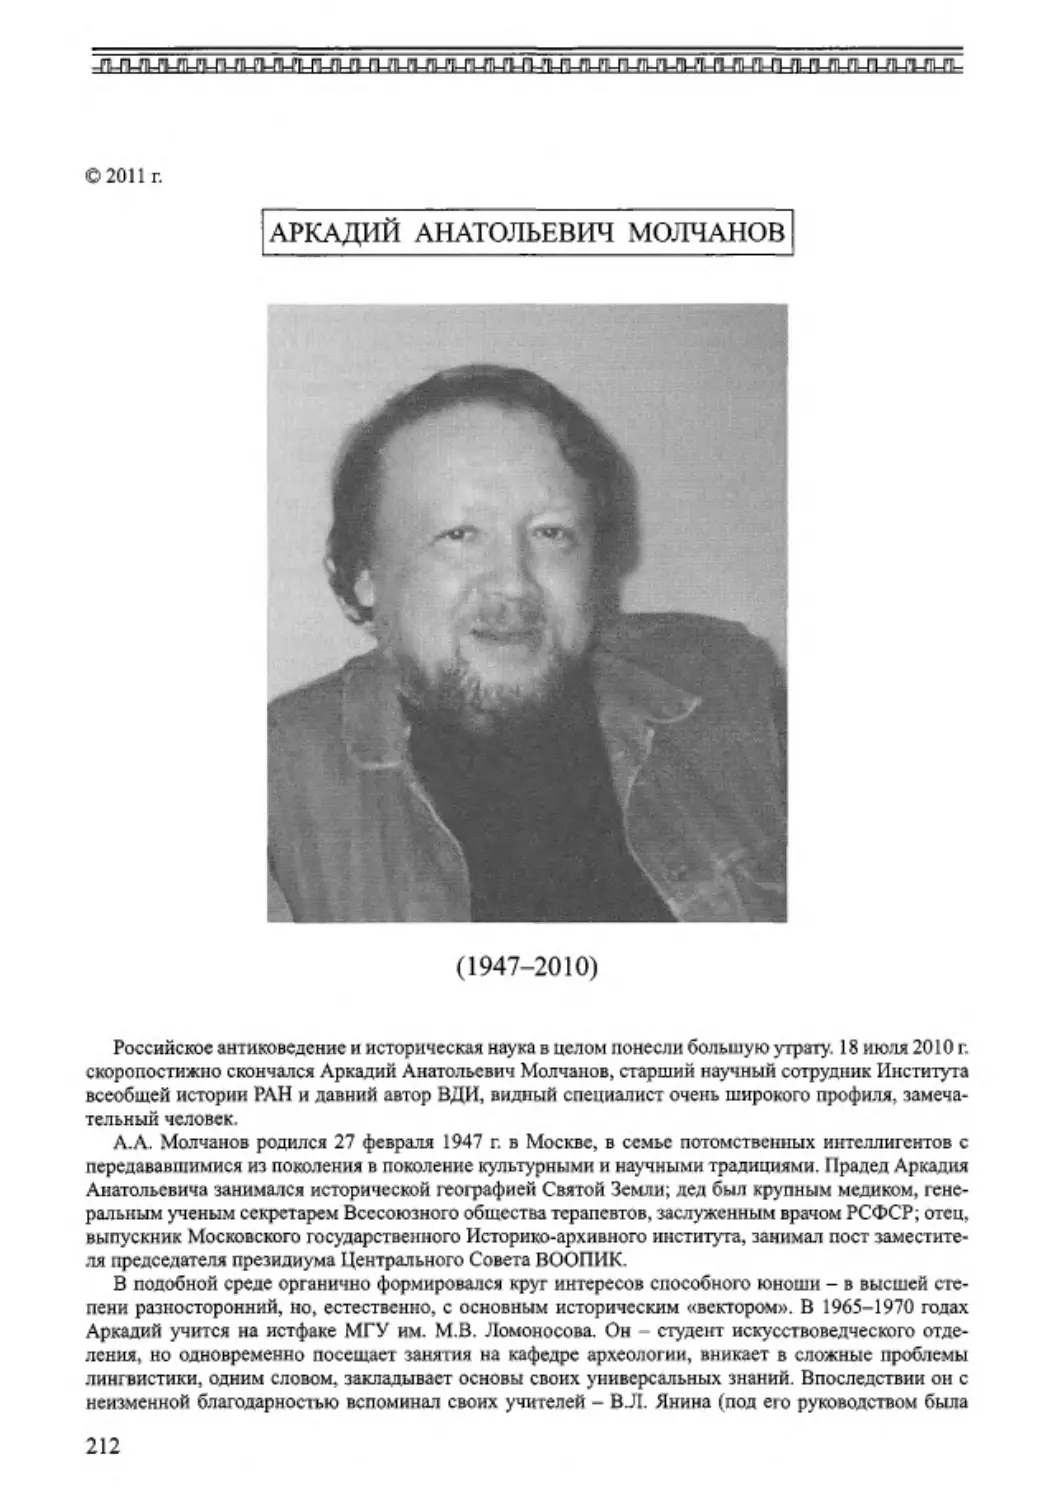 ﻿Аркадий Анатольевич Молчанов ø1947 - 2010